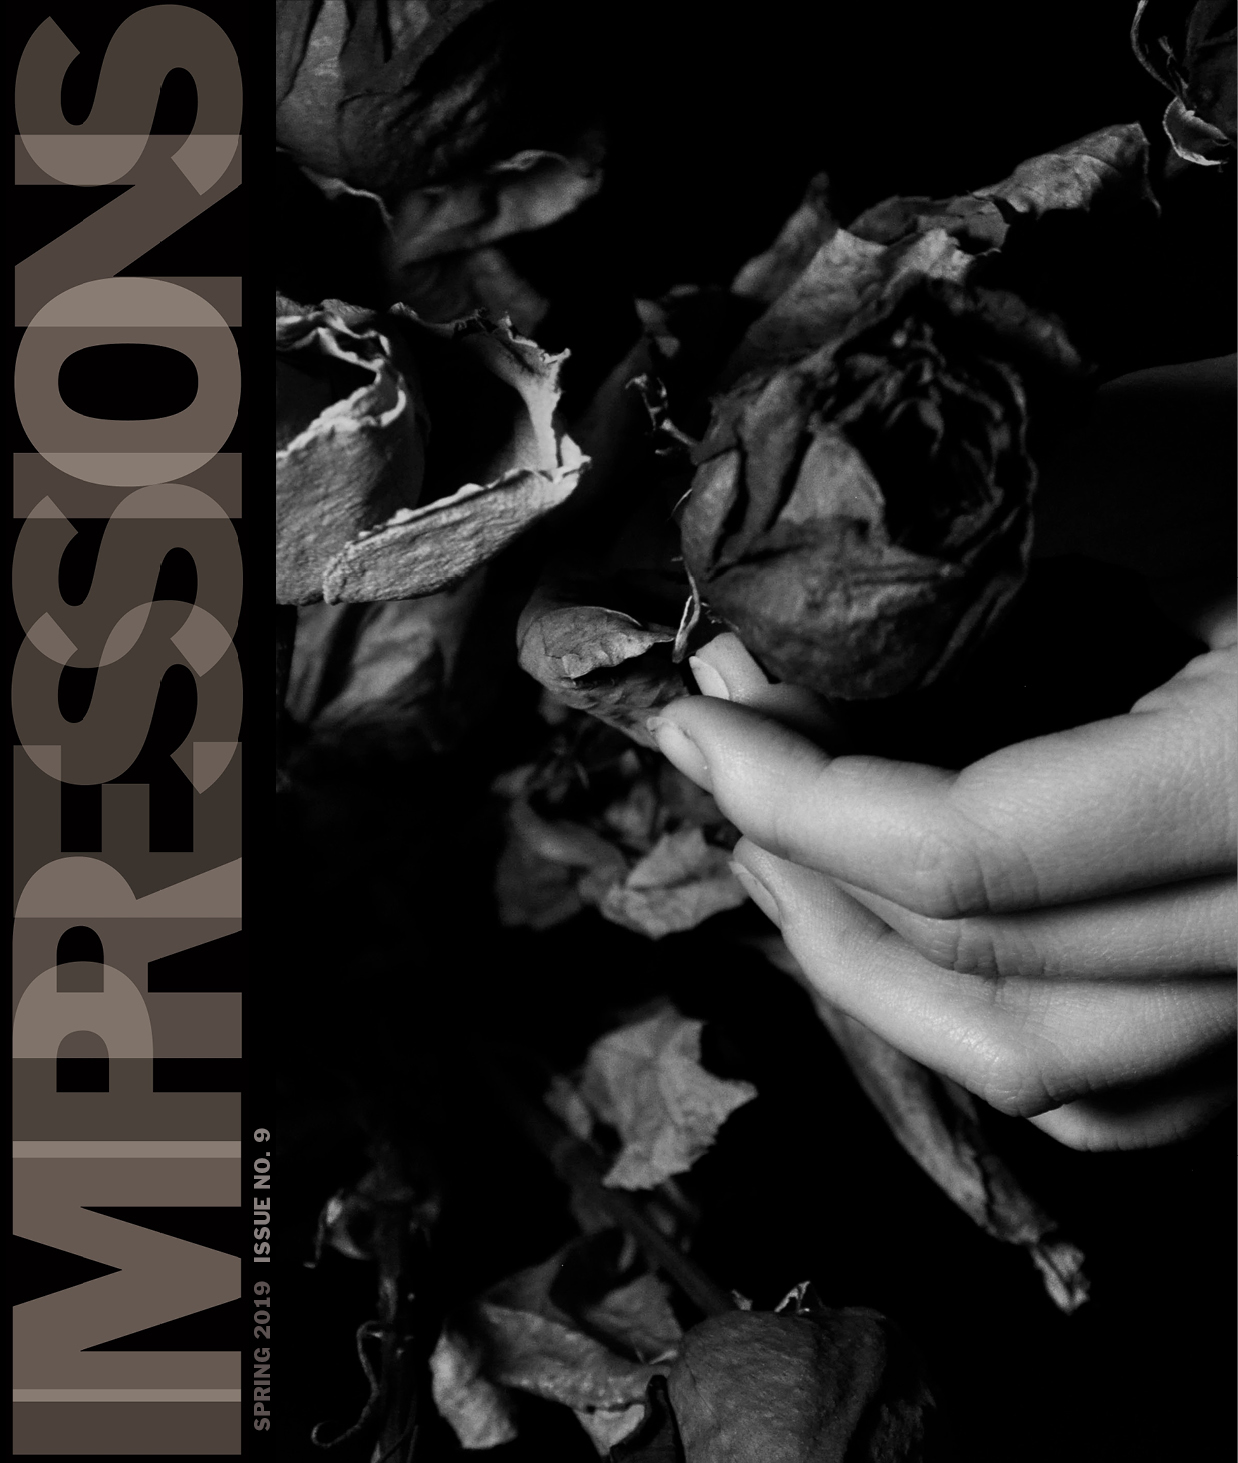 page of Impressions magazine